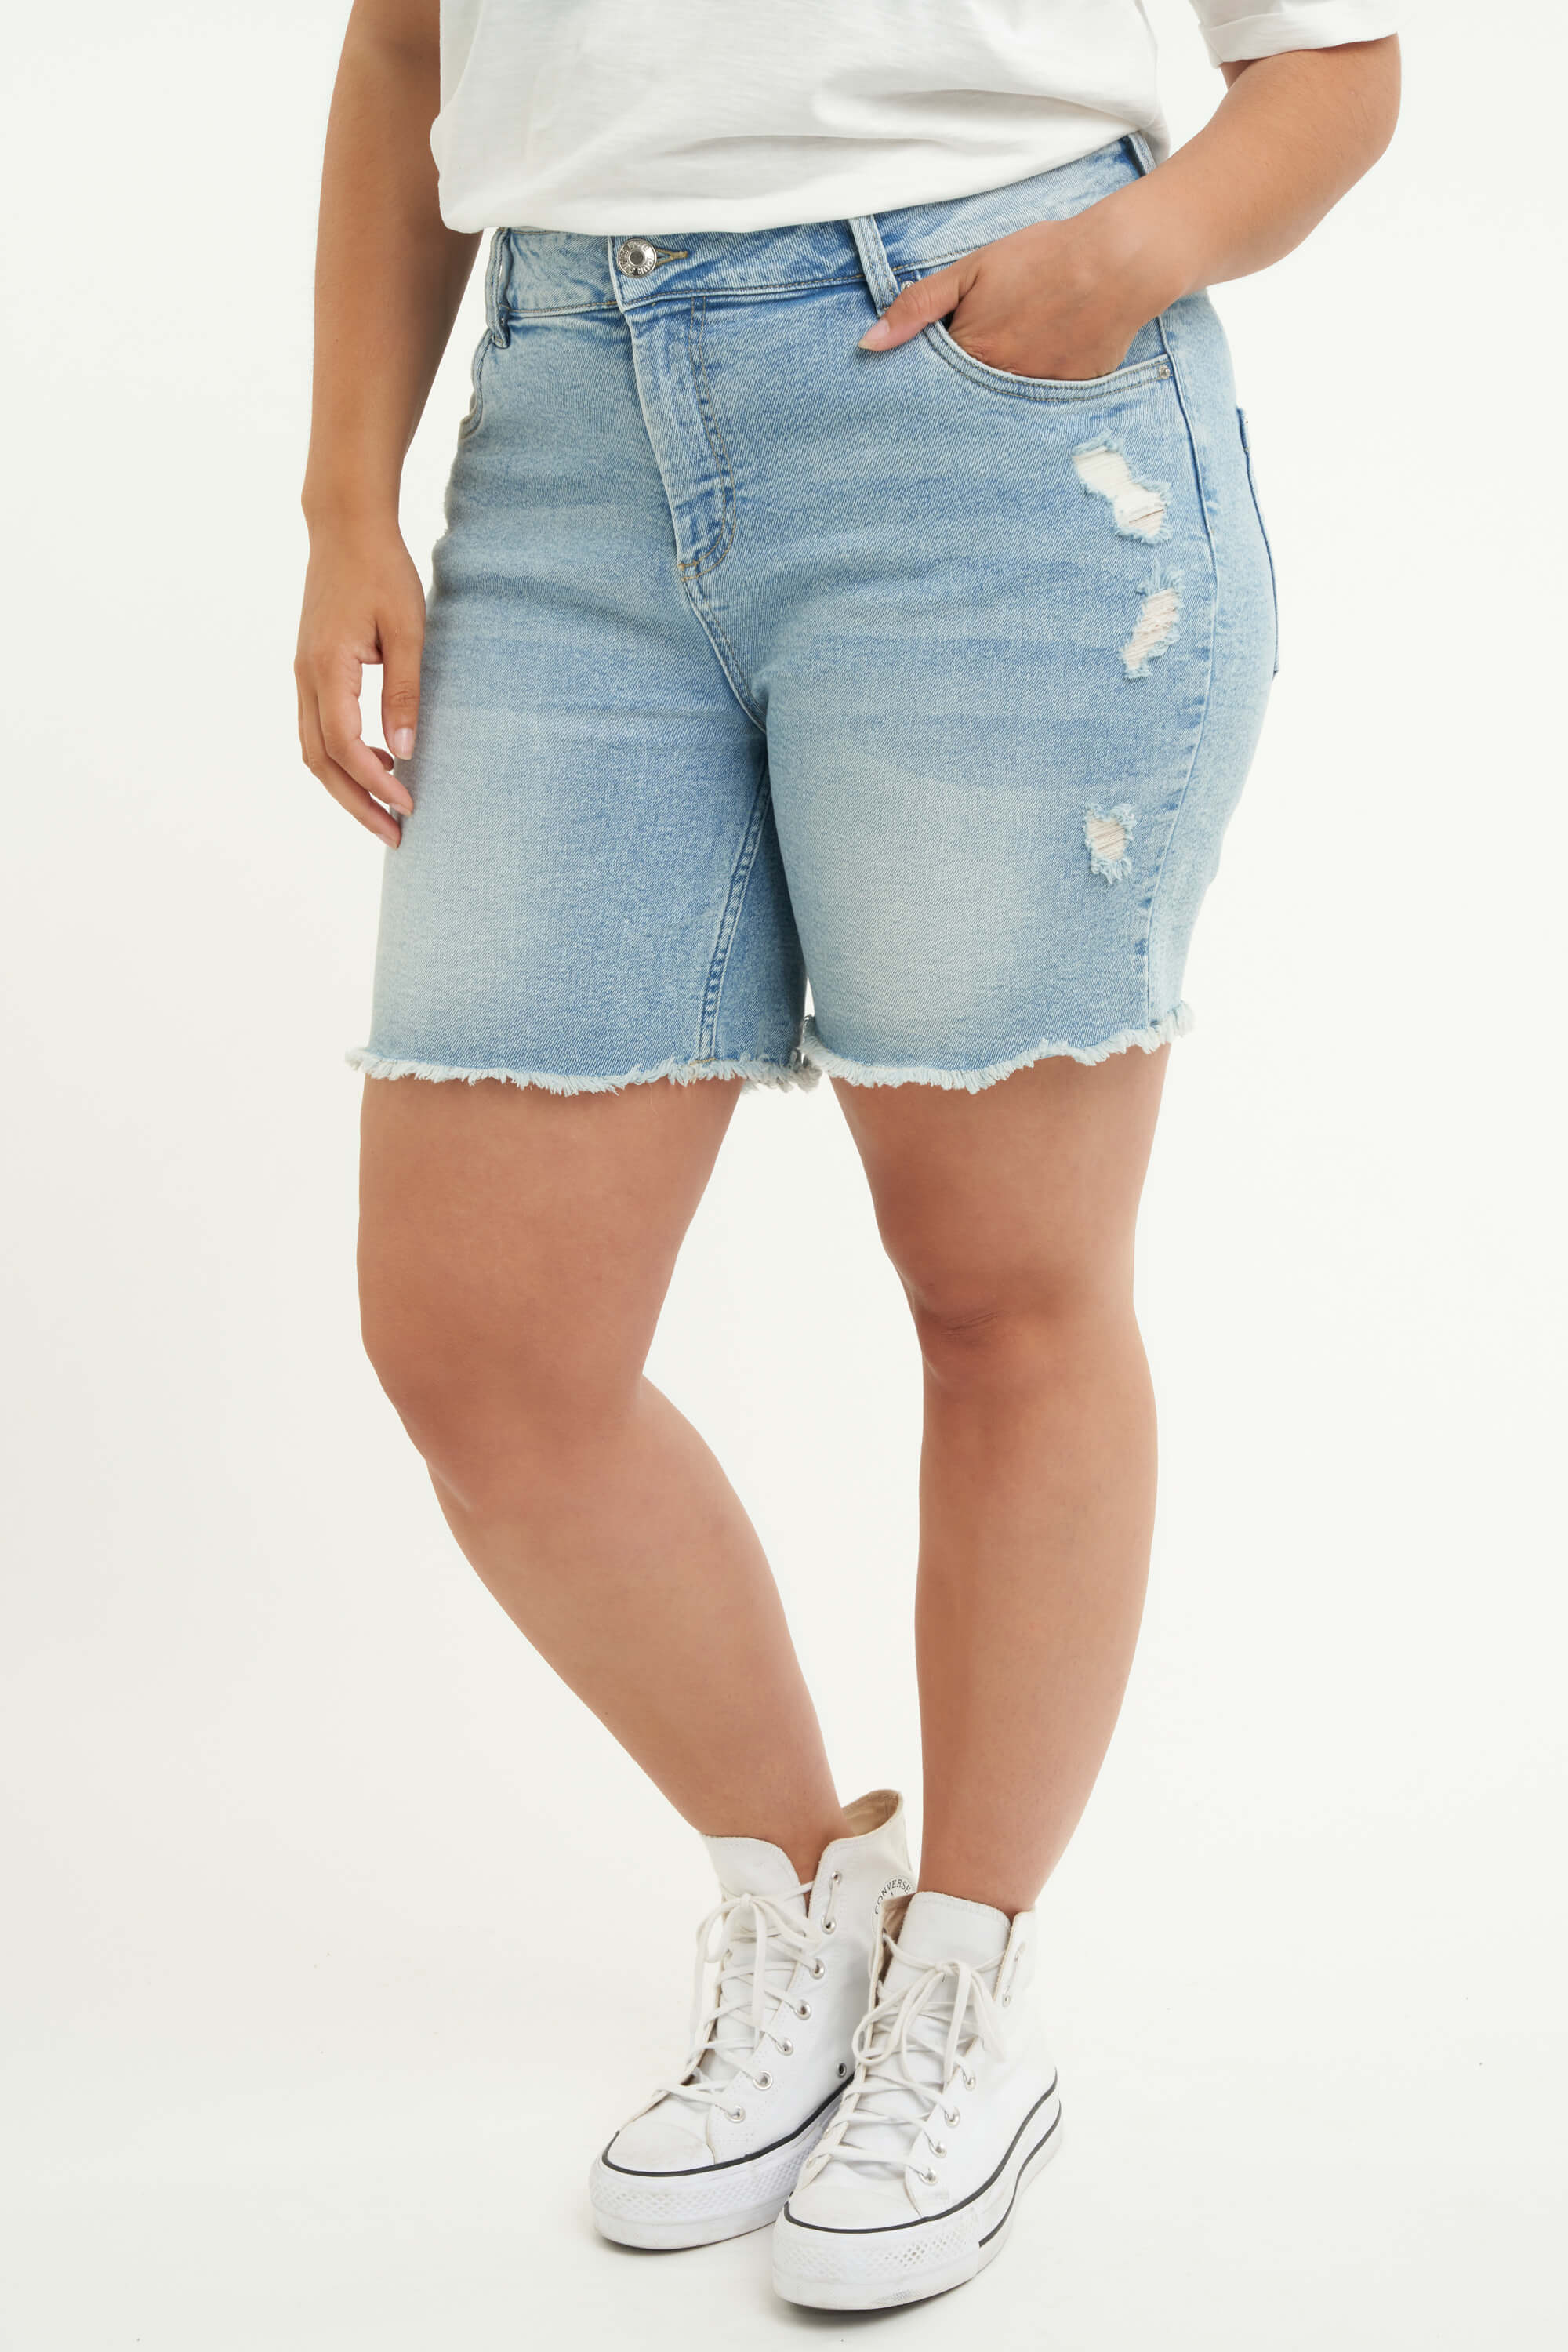 Jeans-Shorts mit Destroyed-Detail image 0